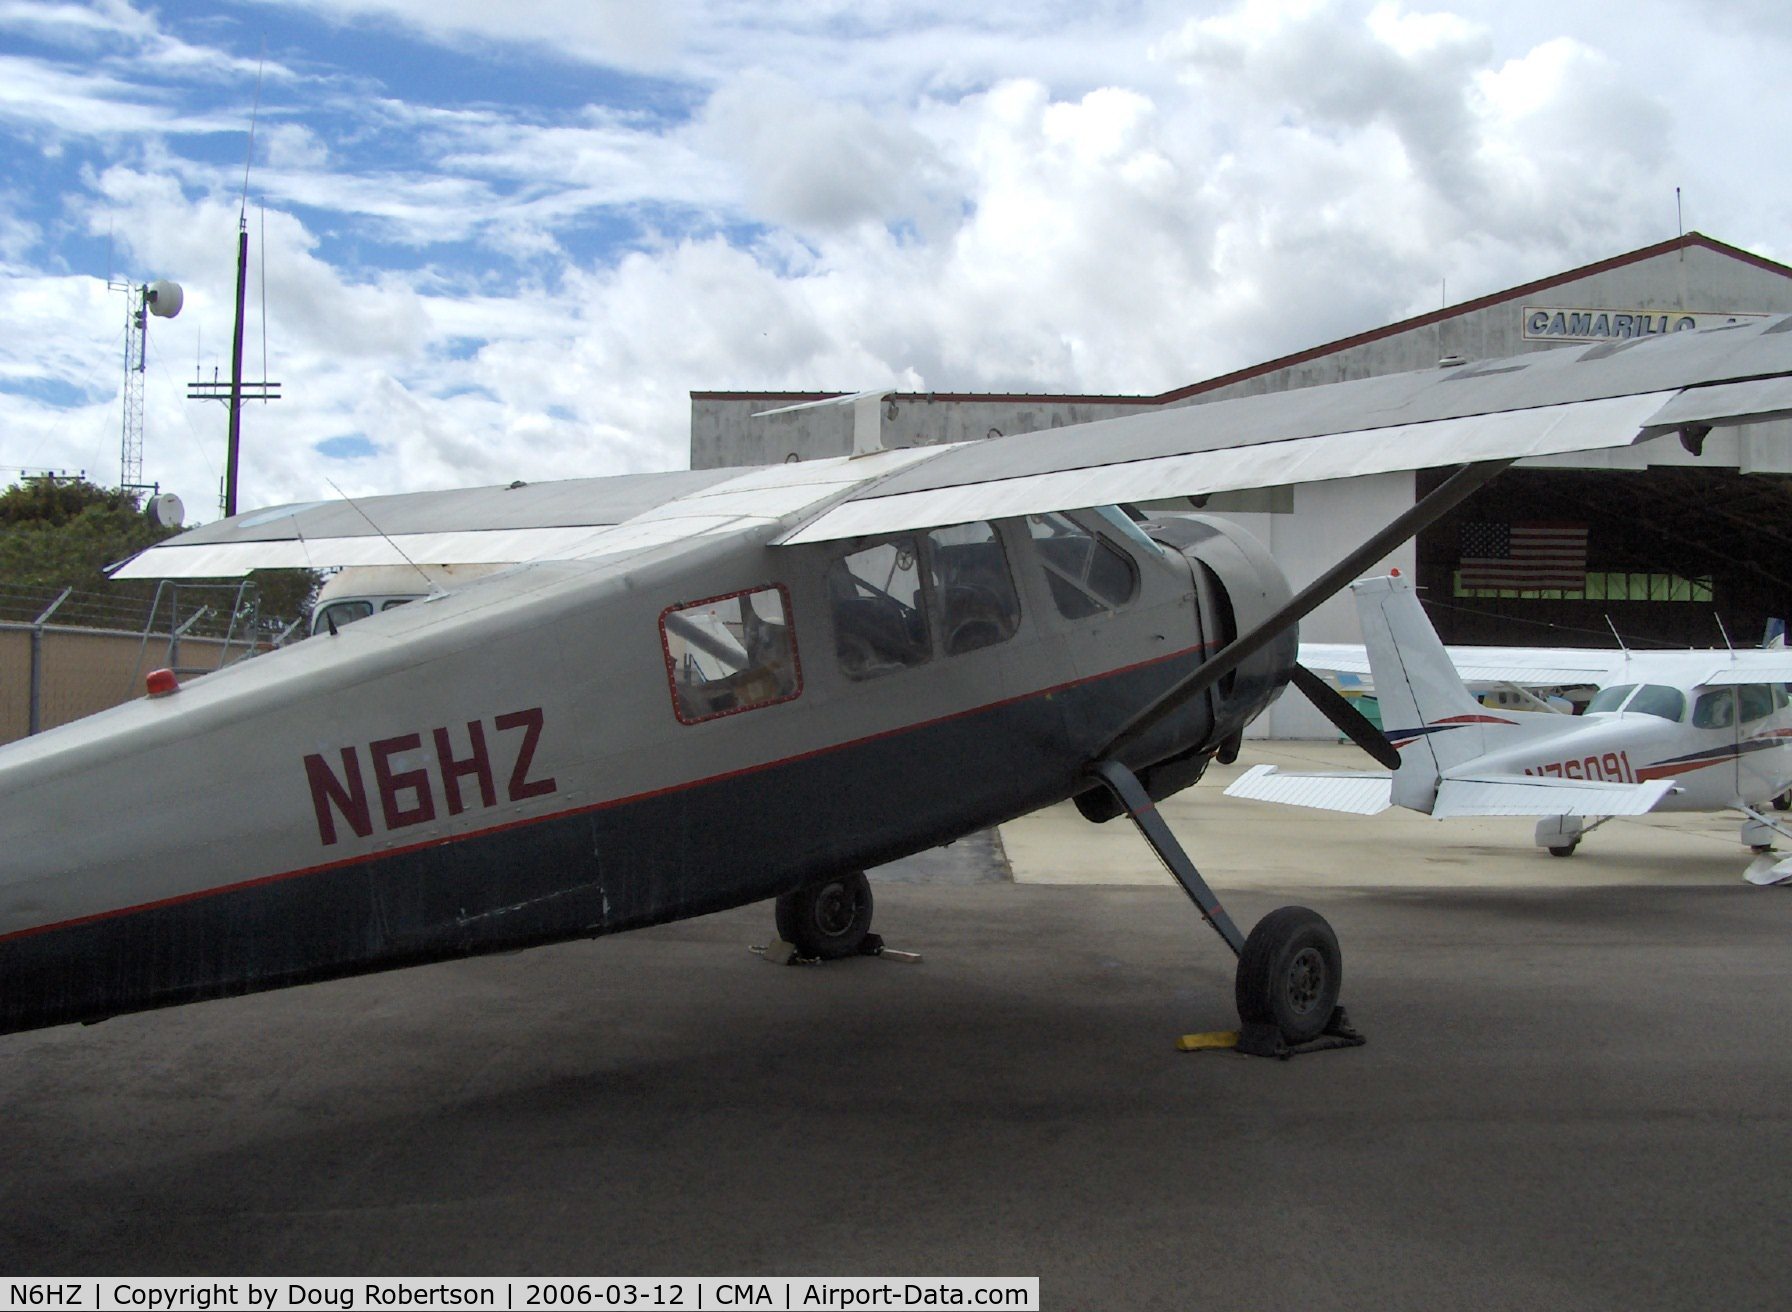 N6HZ, Max Holste MH-1521M Broussard C/N 25C, Avions Max Holste M.H.1521M BROUSSARD, P&W R-985 450 Hp, cabin cover removed